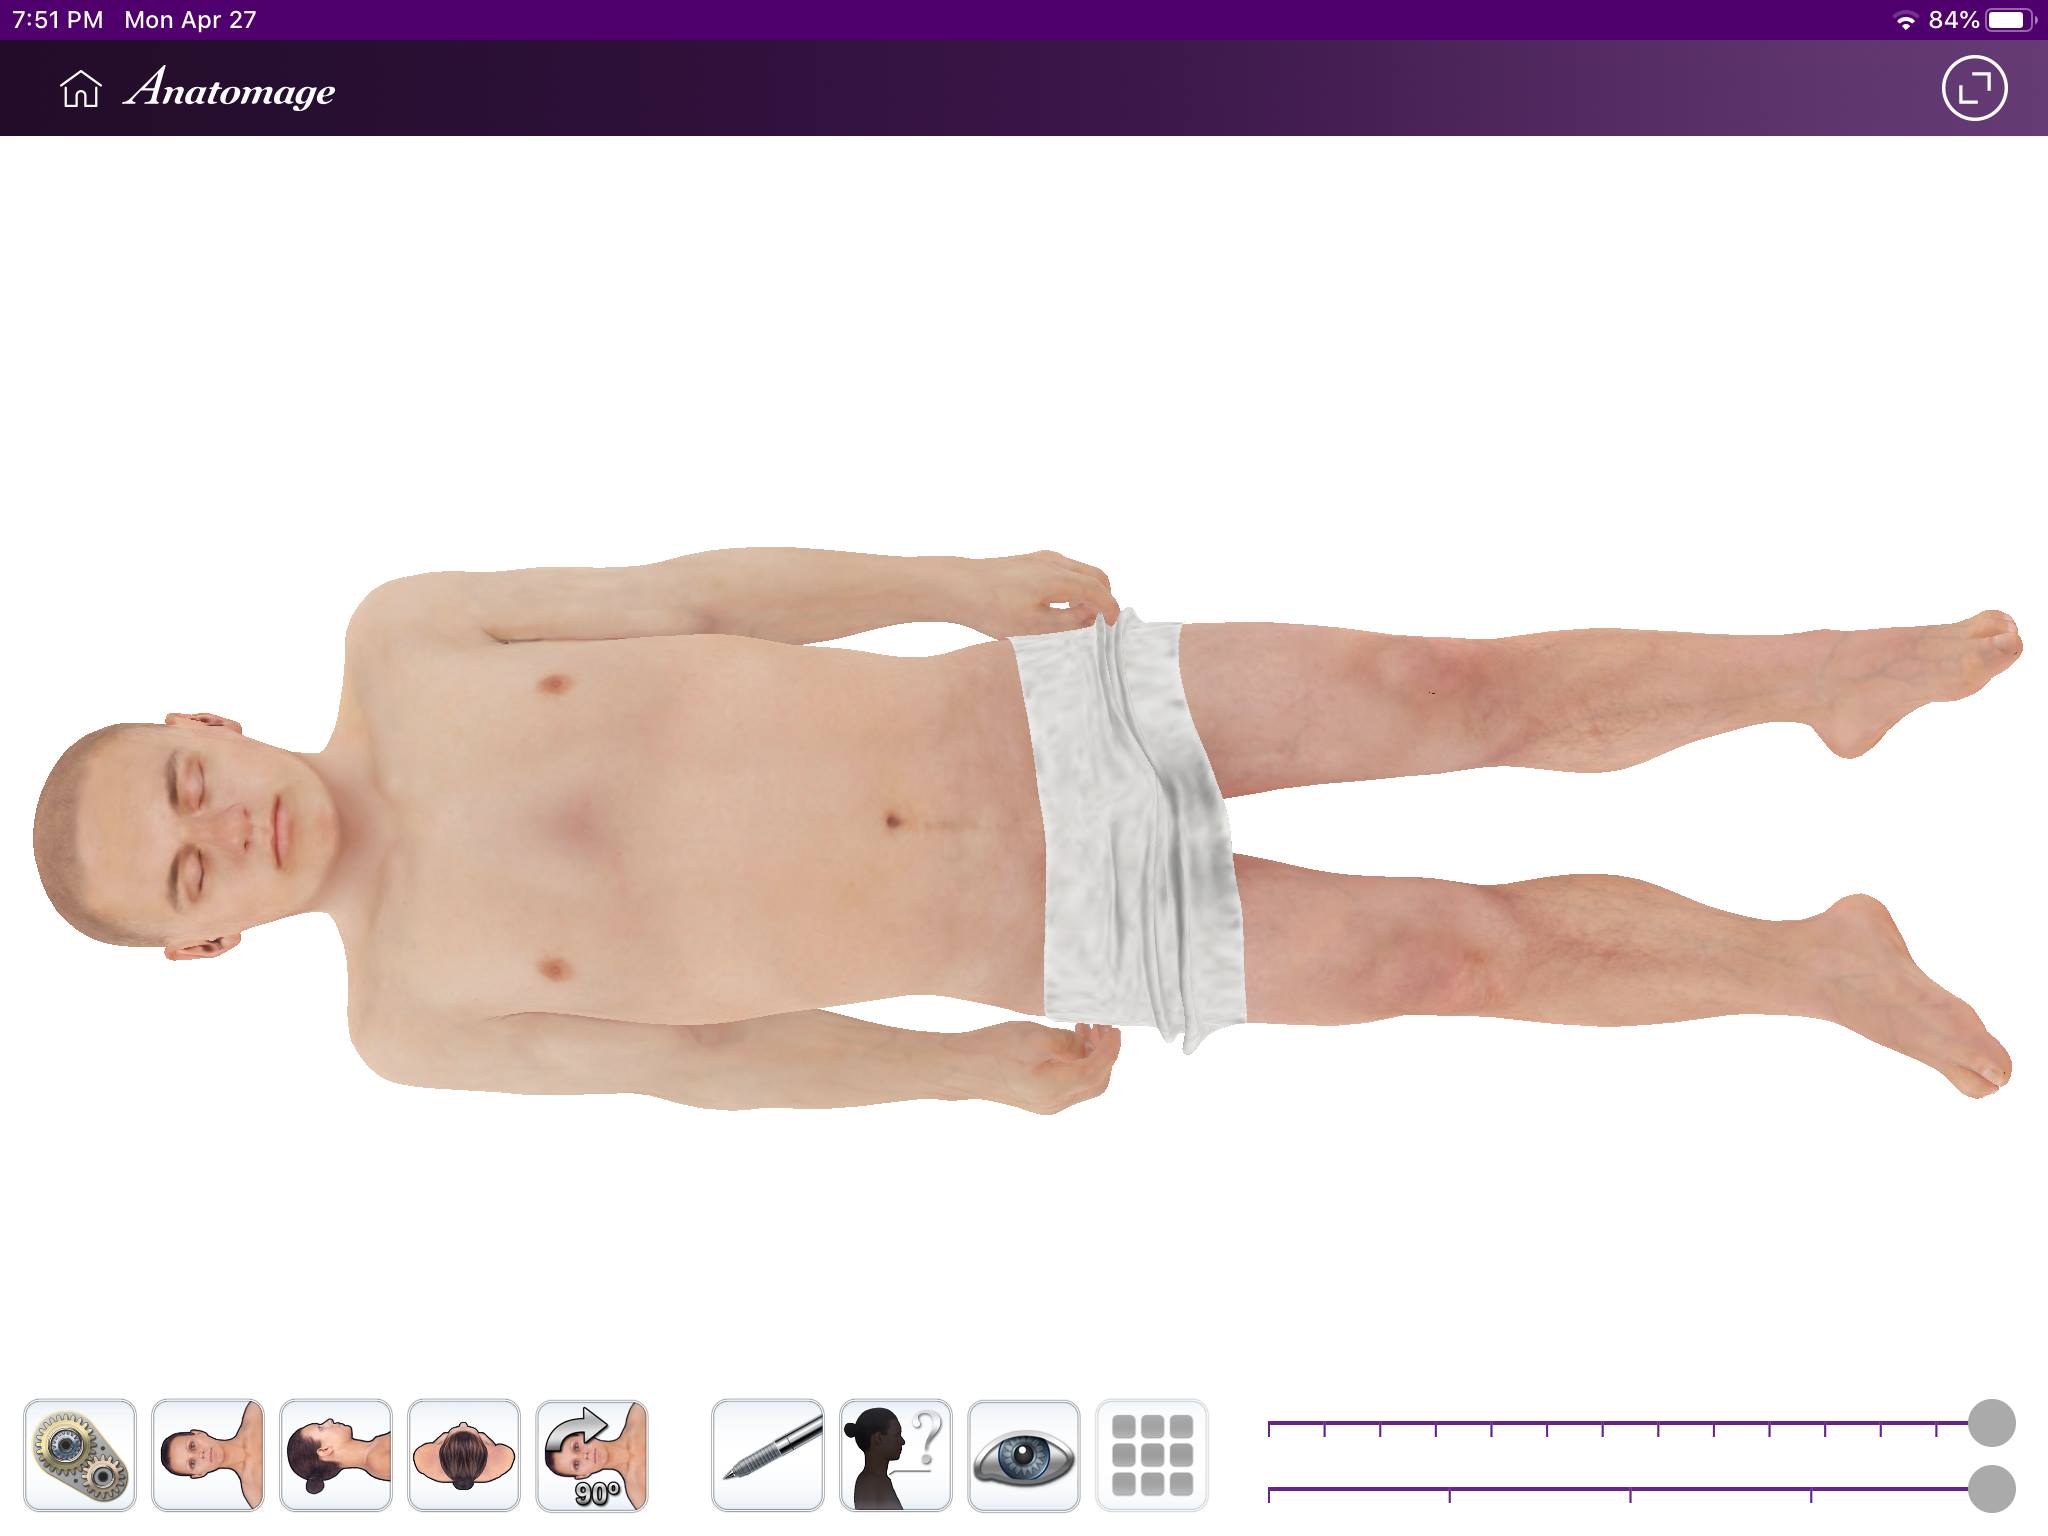 Anatomage 最新 iPad app - Anatomage Table Companion